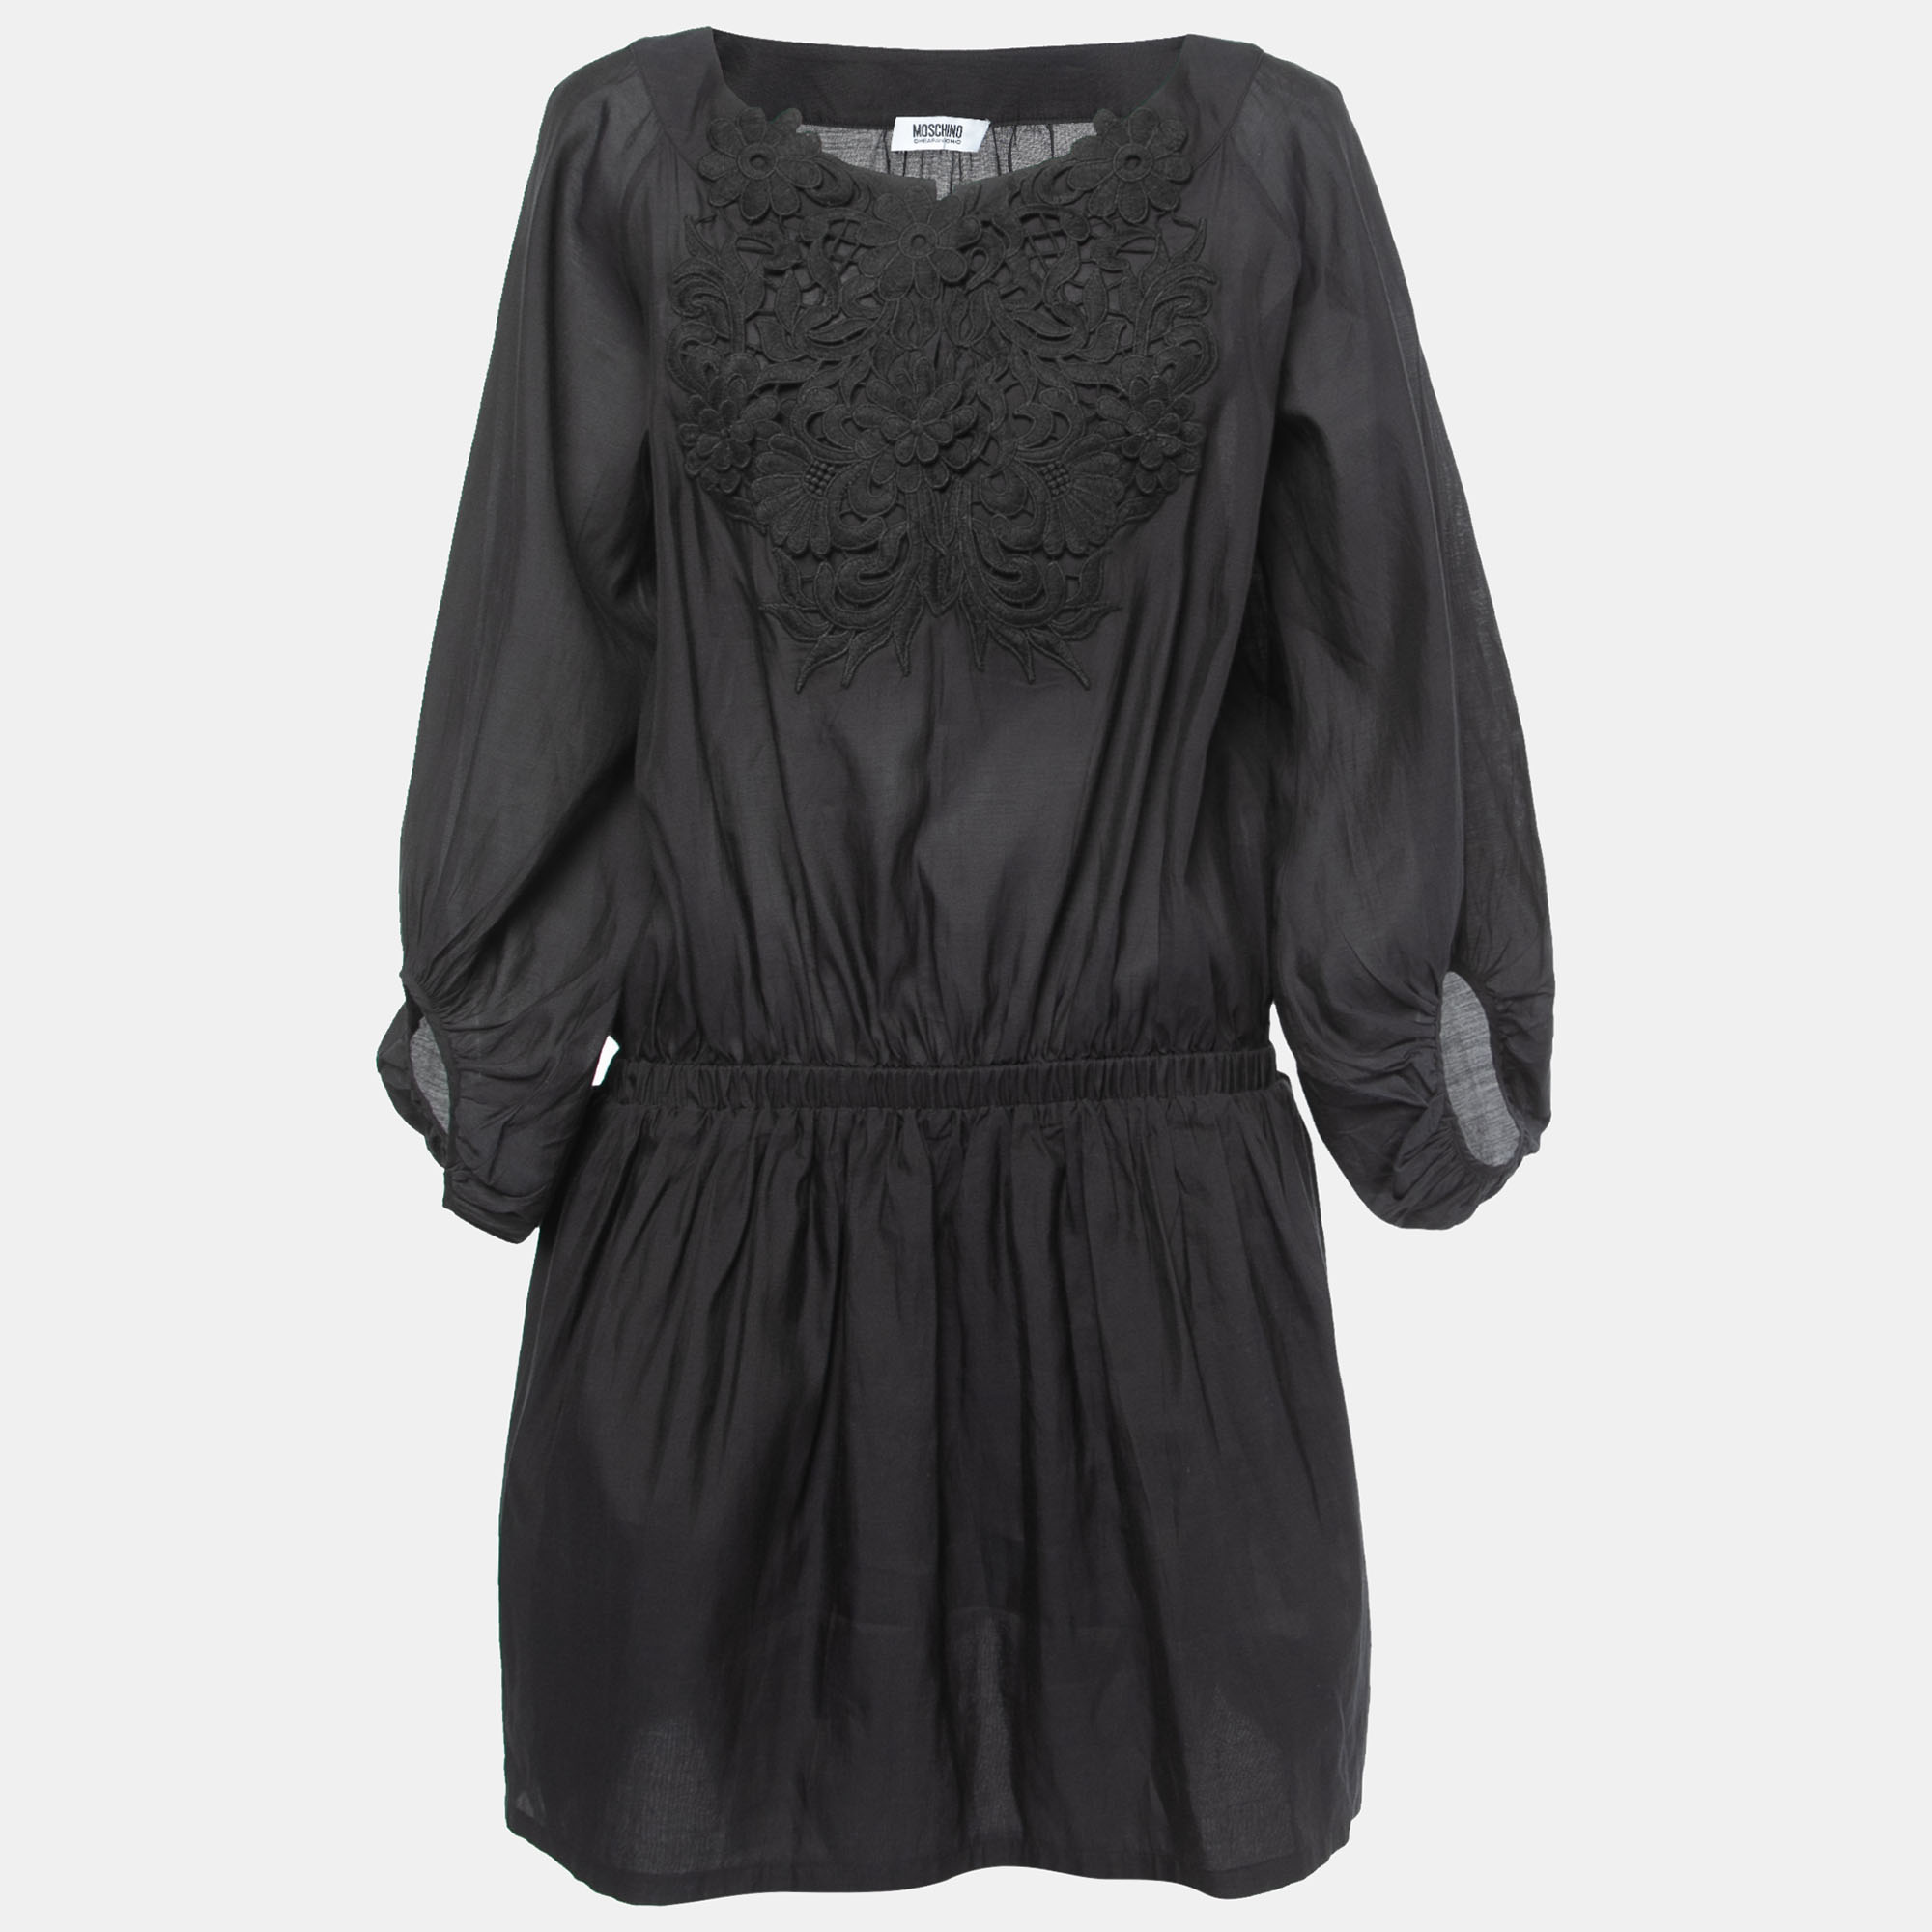 

Moschino Cheap & Chic Black Cotton Lace Trimmed Elasticized Waist Short Dress L